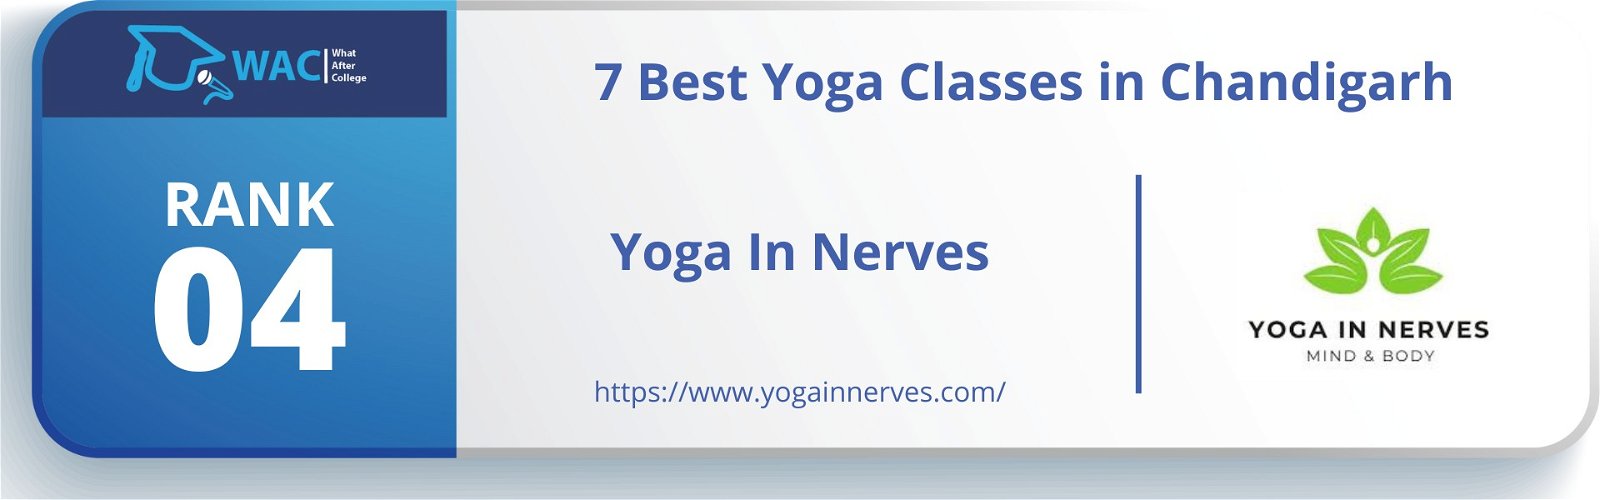 Yoga In Nerves